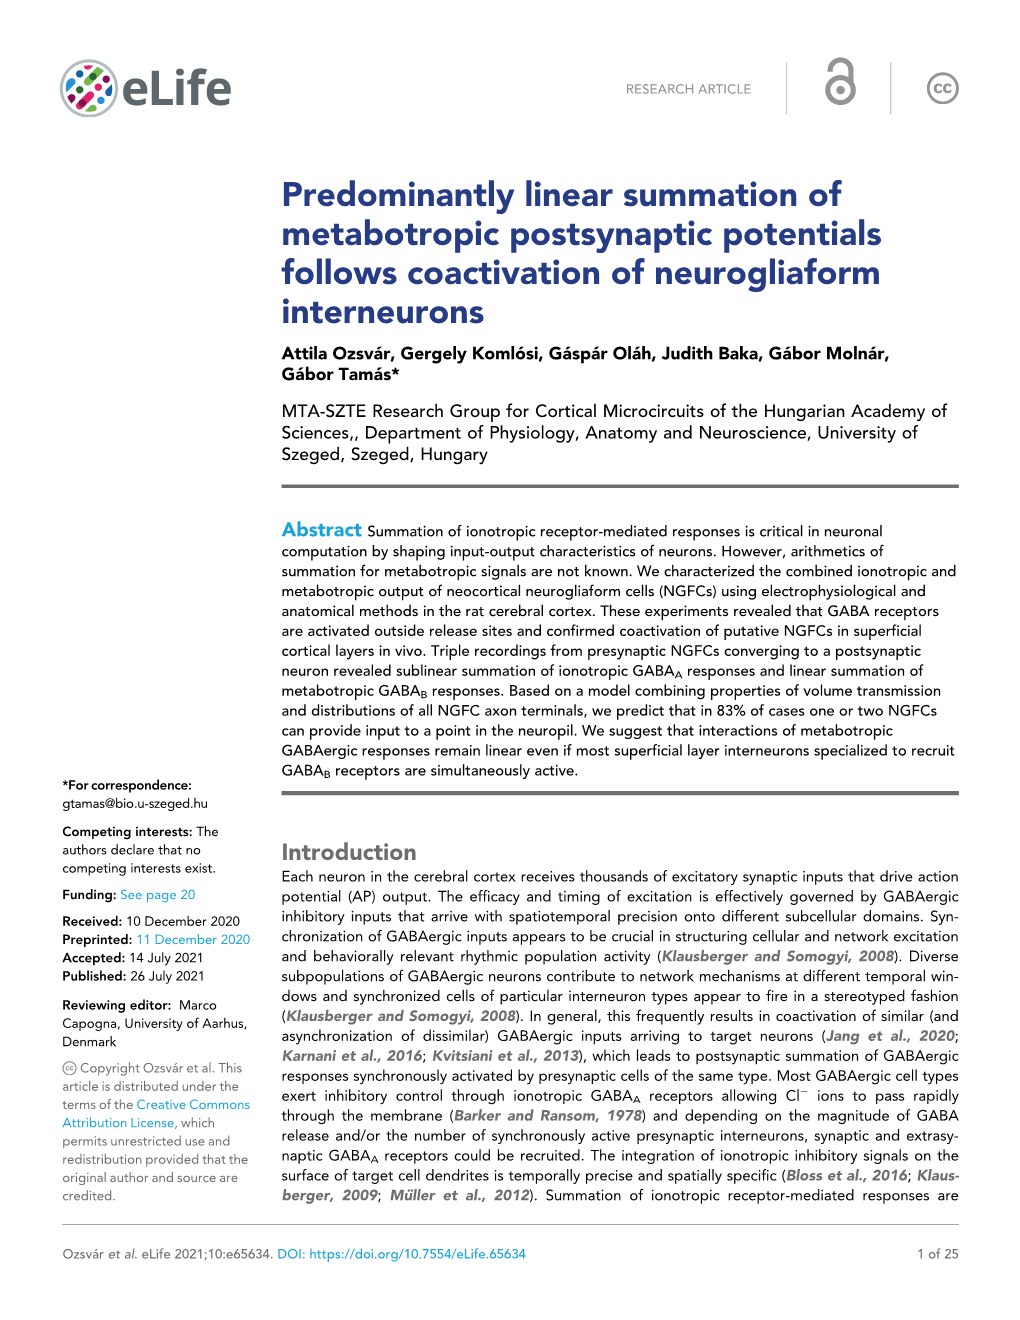 Predominantly Linear Summation of Metabotropic Postsynaptic